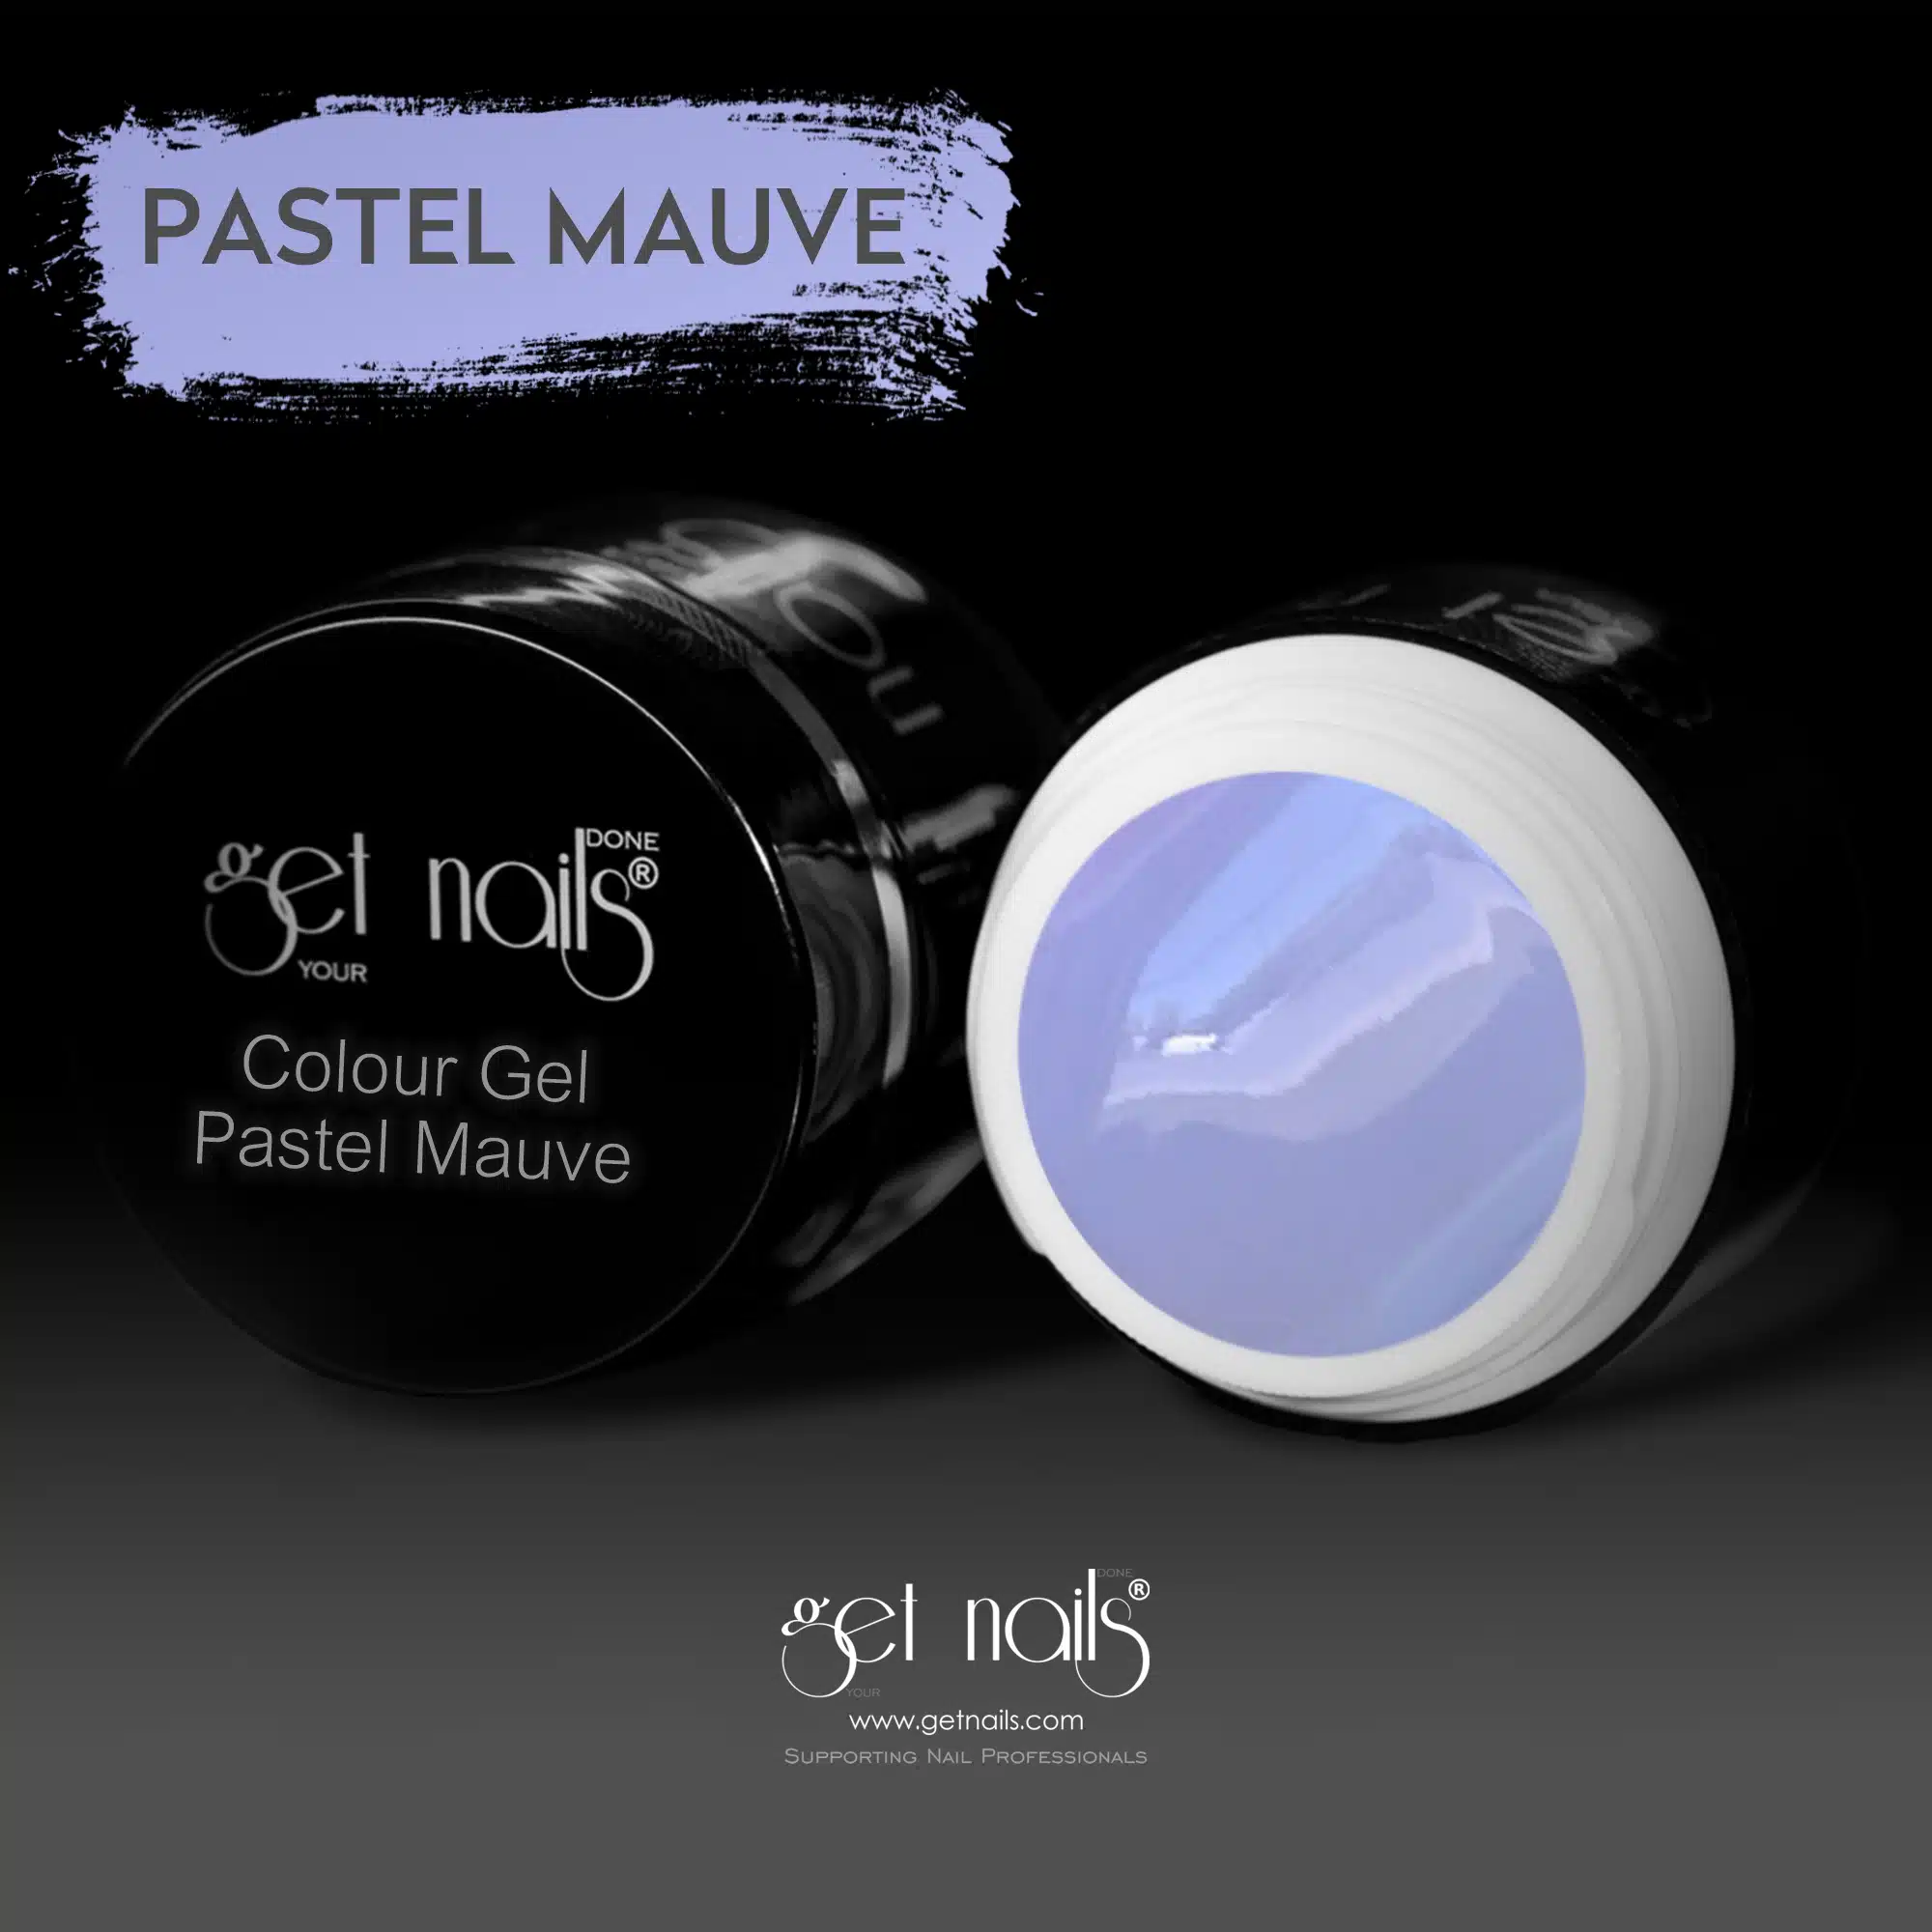 Get Nails Austria - Цветной гель Pastel Mauve 5g